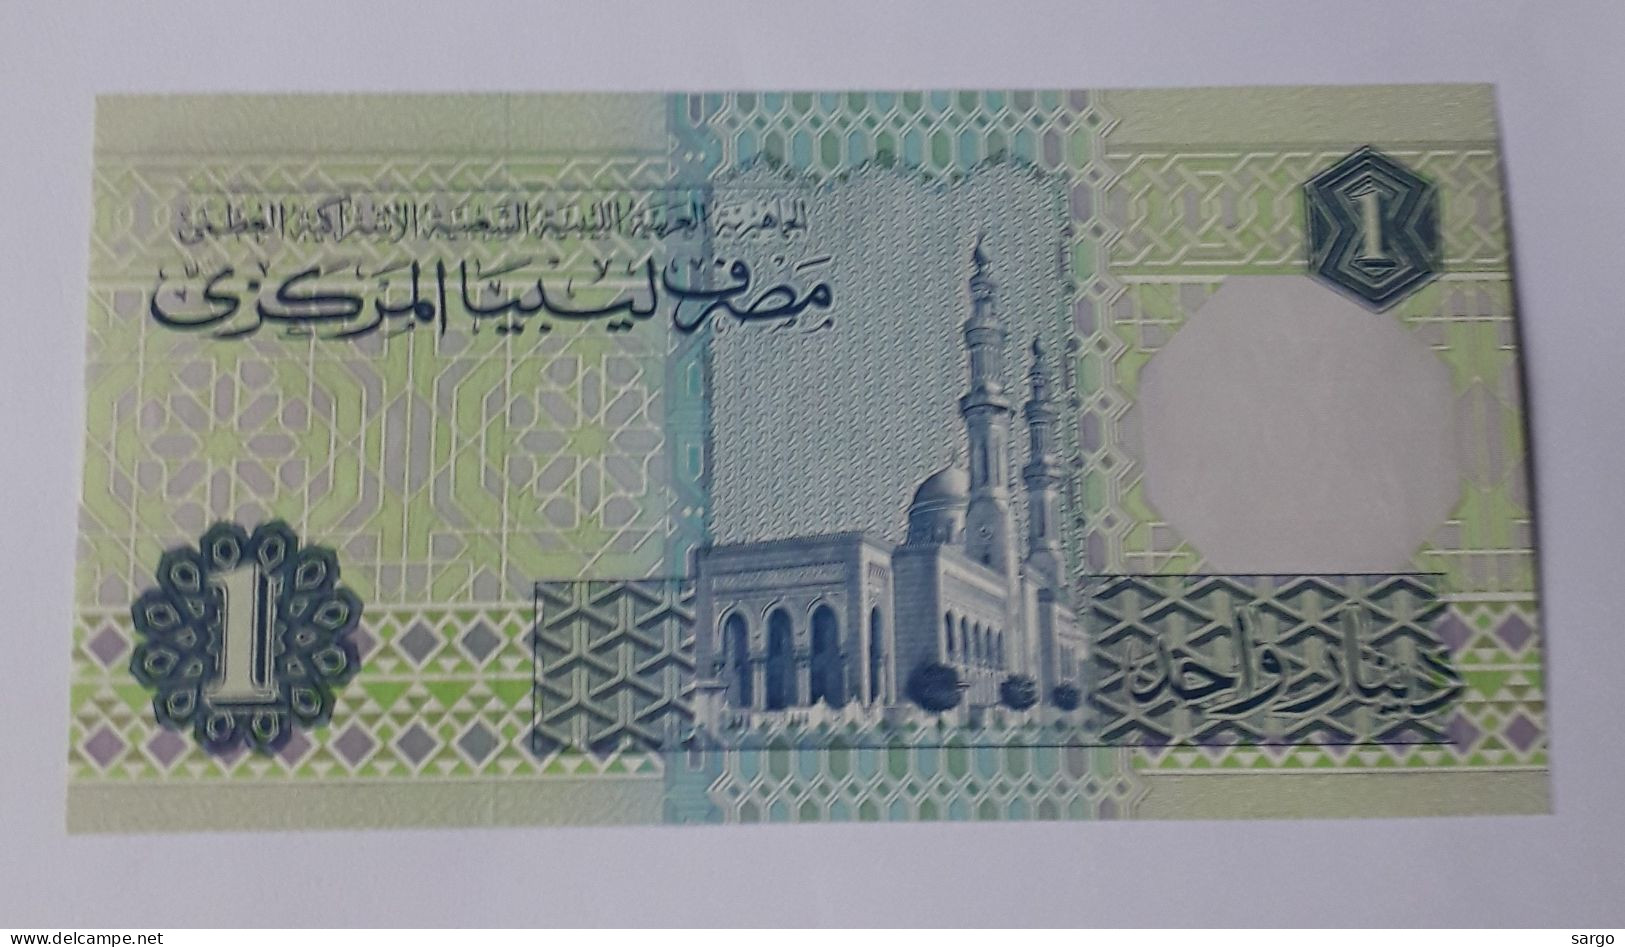 LIBYA - 1 DINAR - 1991 -  P 59b  - UNC - BANKNOTES - PAPER MONEY - CARTAMONETA - - Libyen